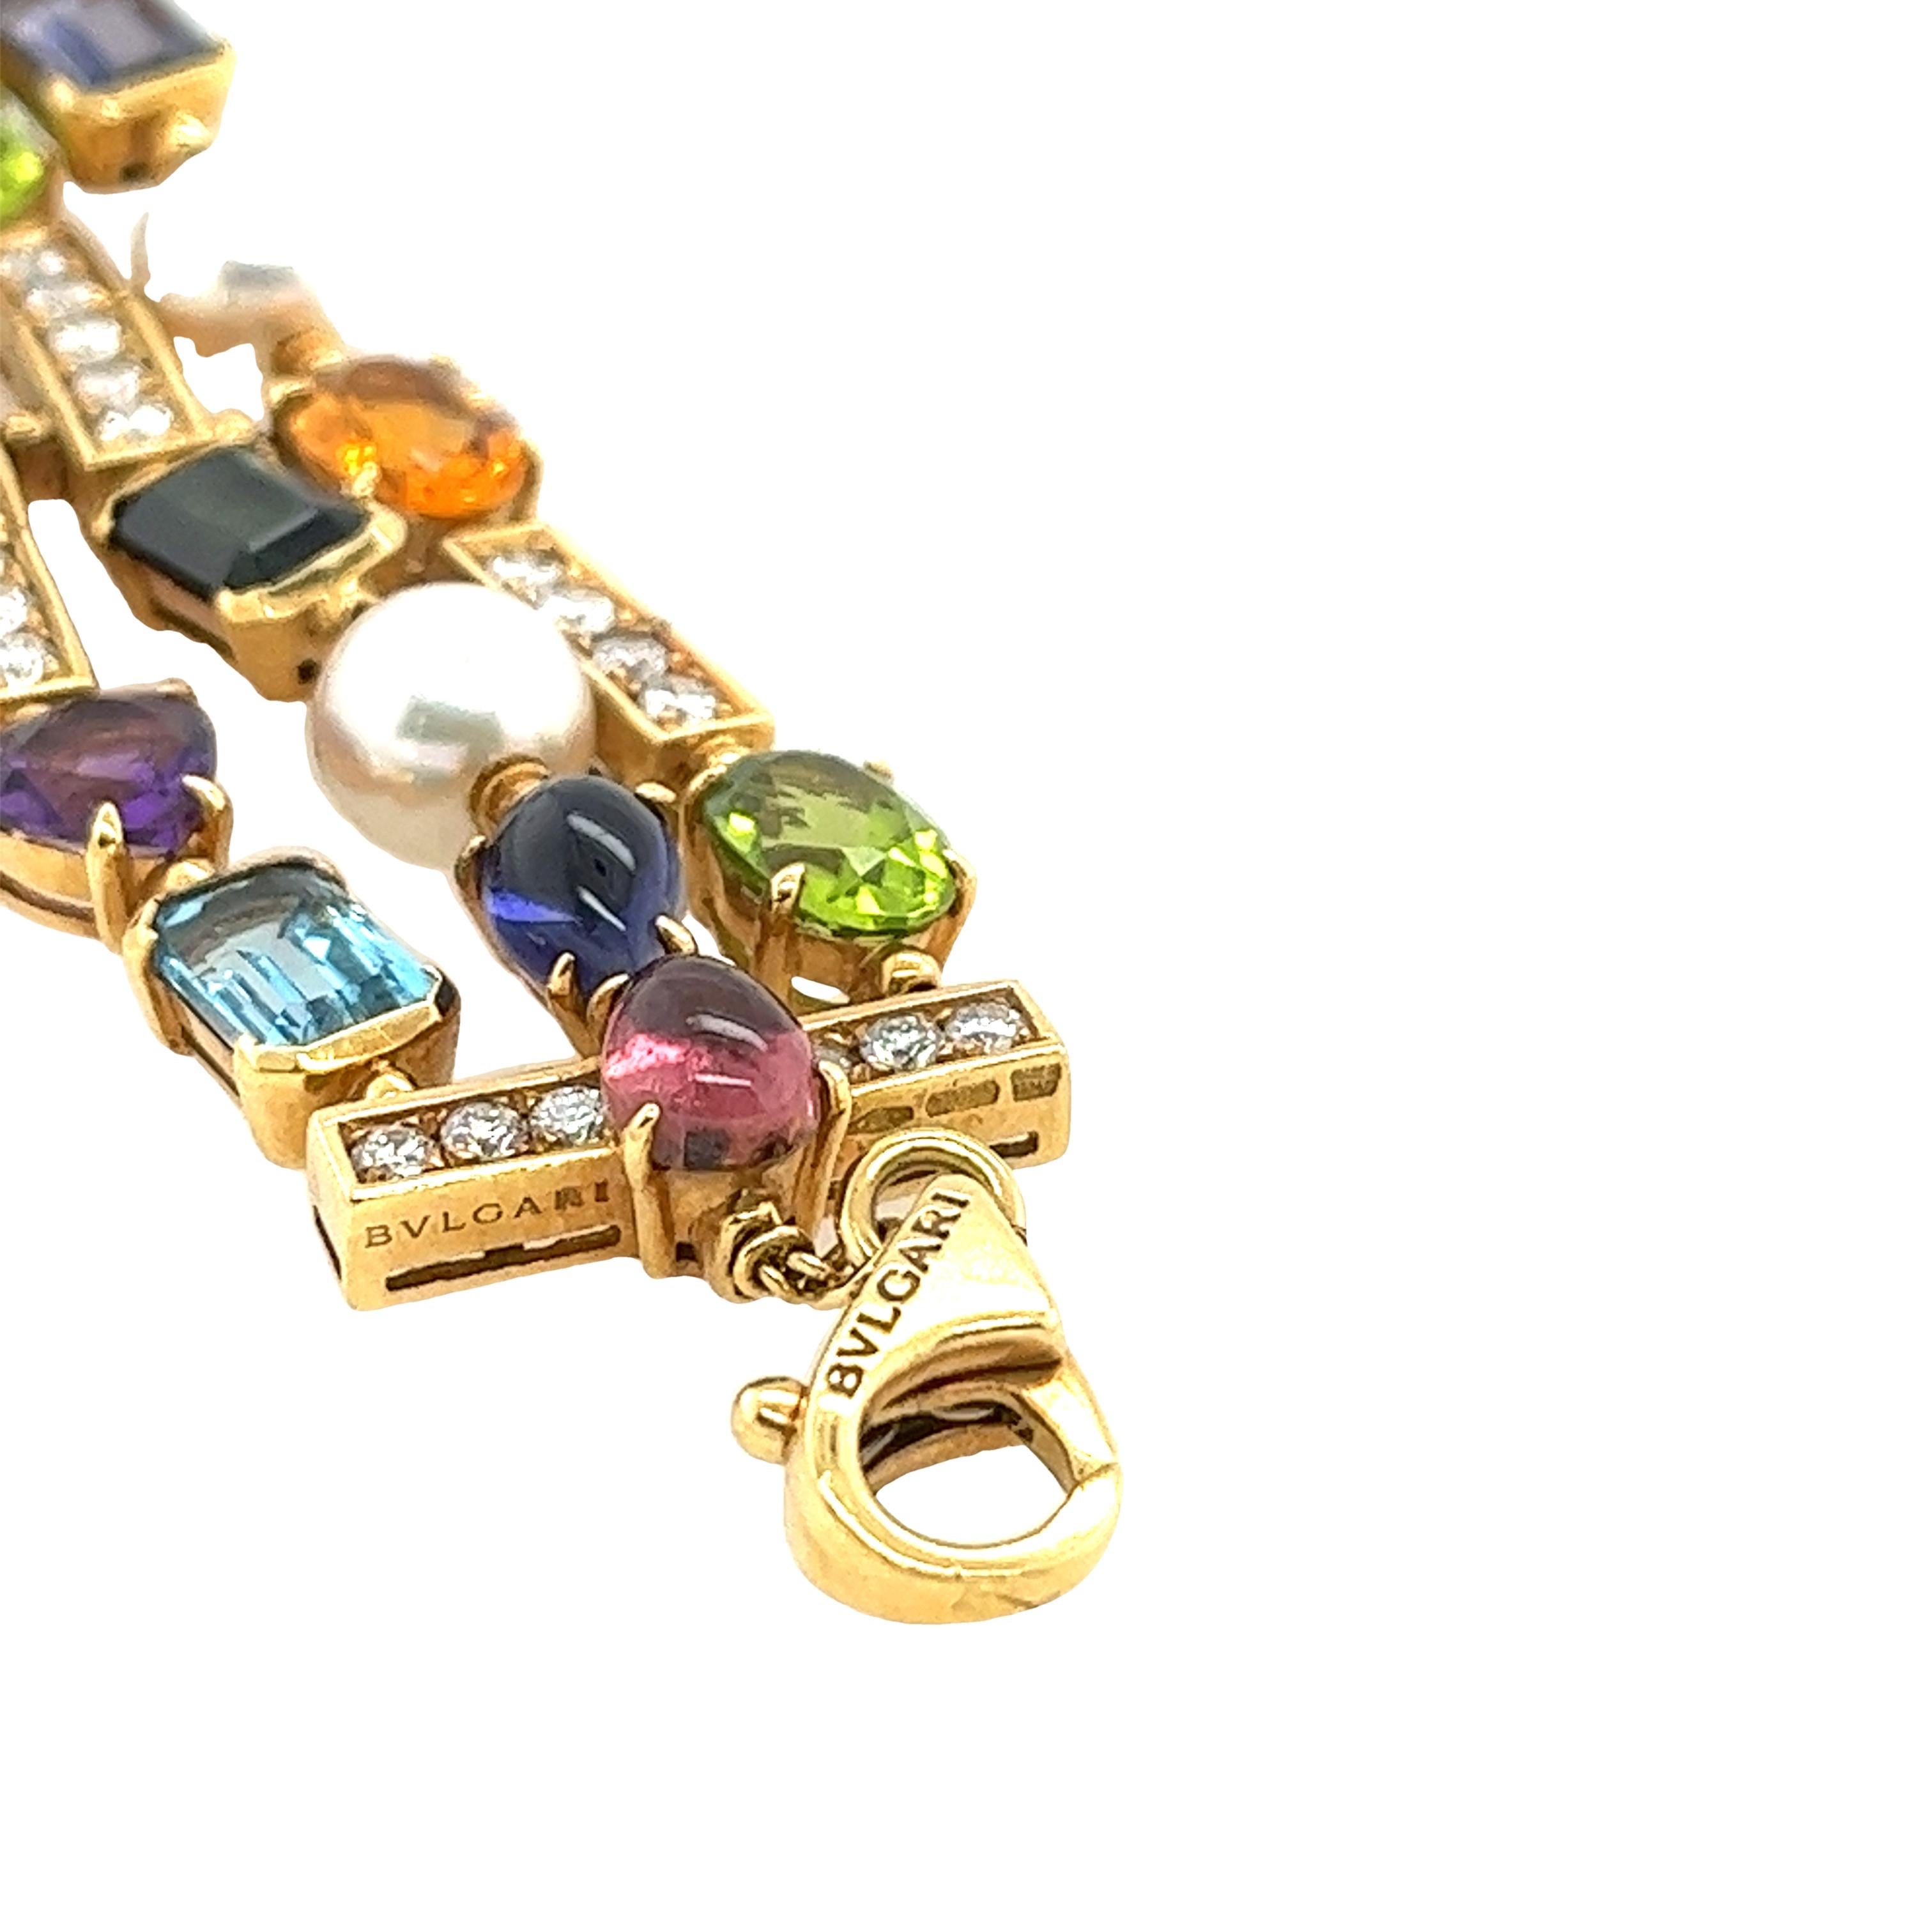 Oval Cut Rare Bvlgari Precious Gemstone Bracelet 'Allegra' For Sale